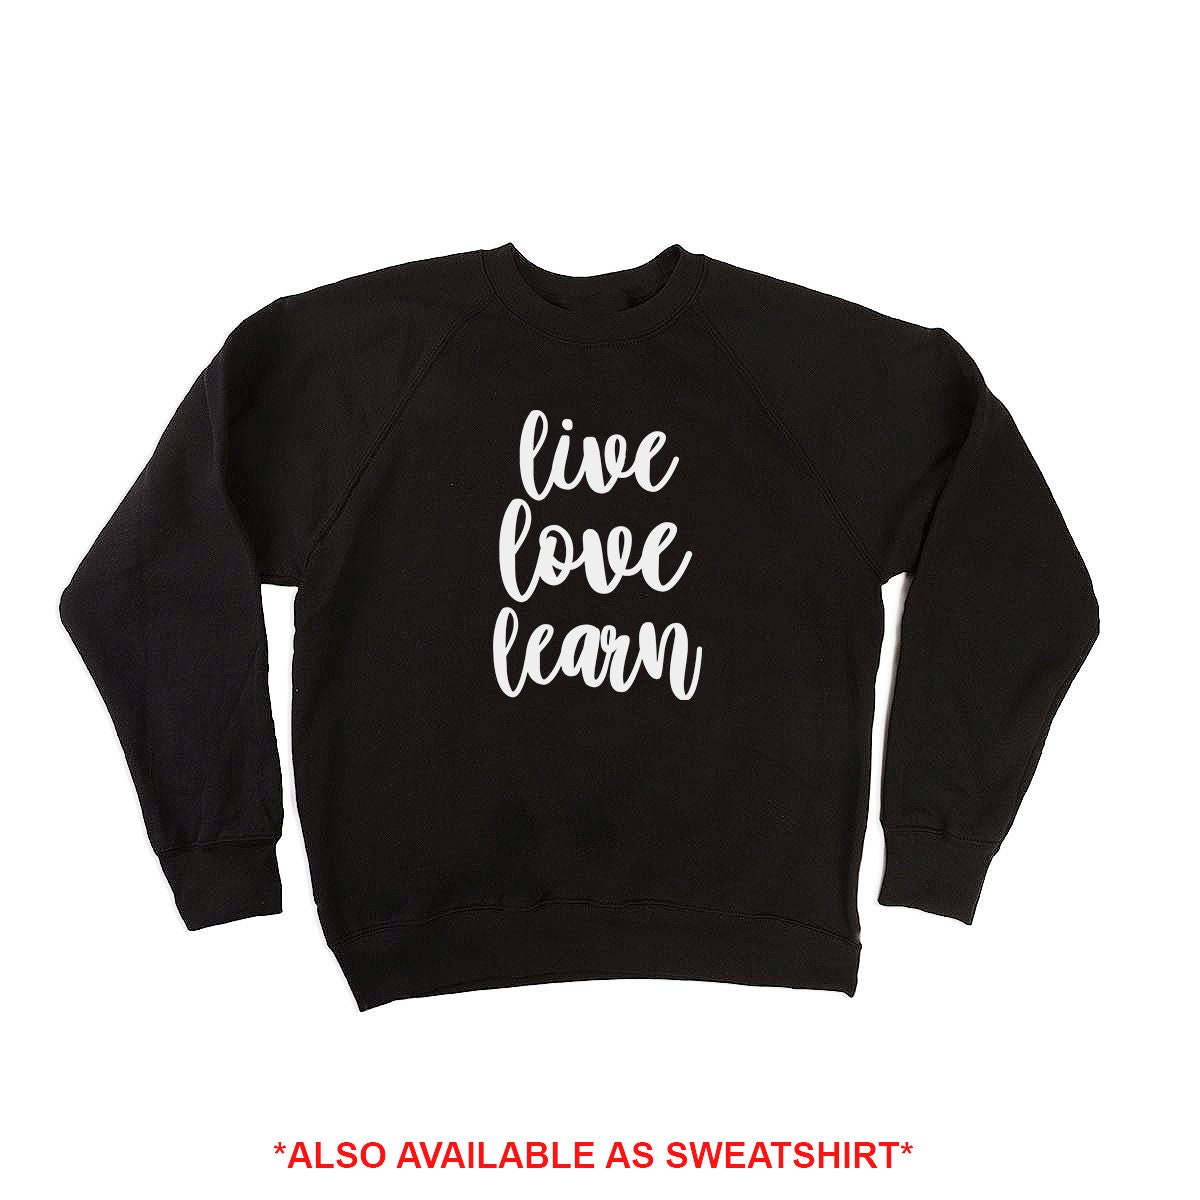 Live love Learn T-Shirt/Sweatshirt, Kids Cute T-Shirt, Back To School Shirt, Positive T-Shirt/Sweatshirt, Slogan T-shirt